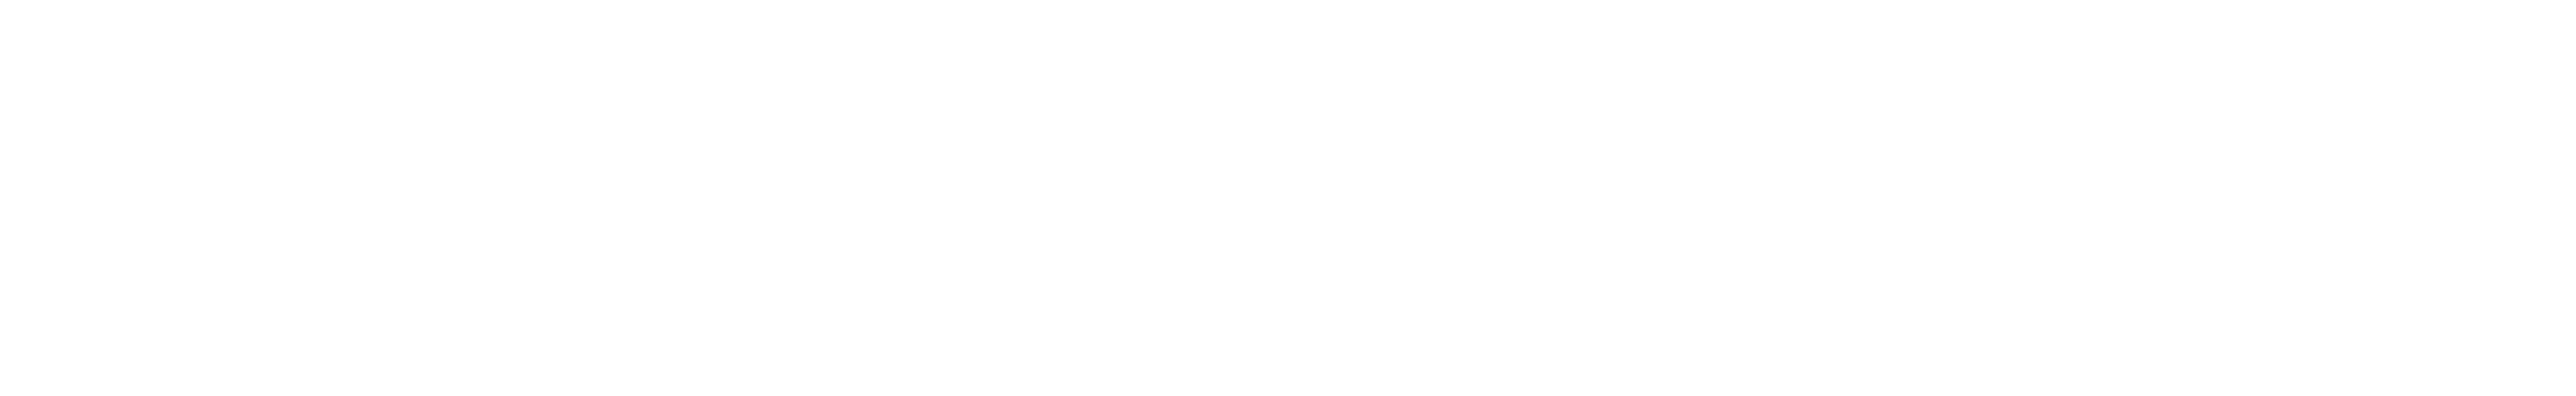 Creativebrief logo white